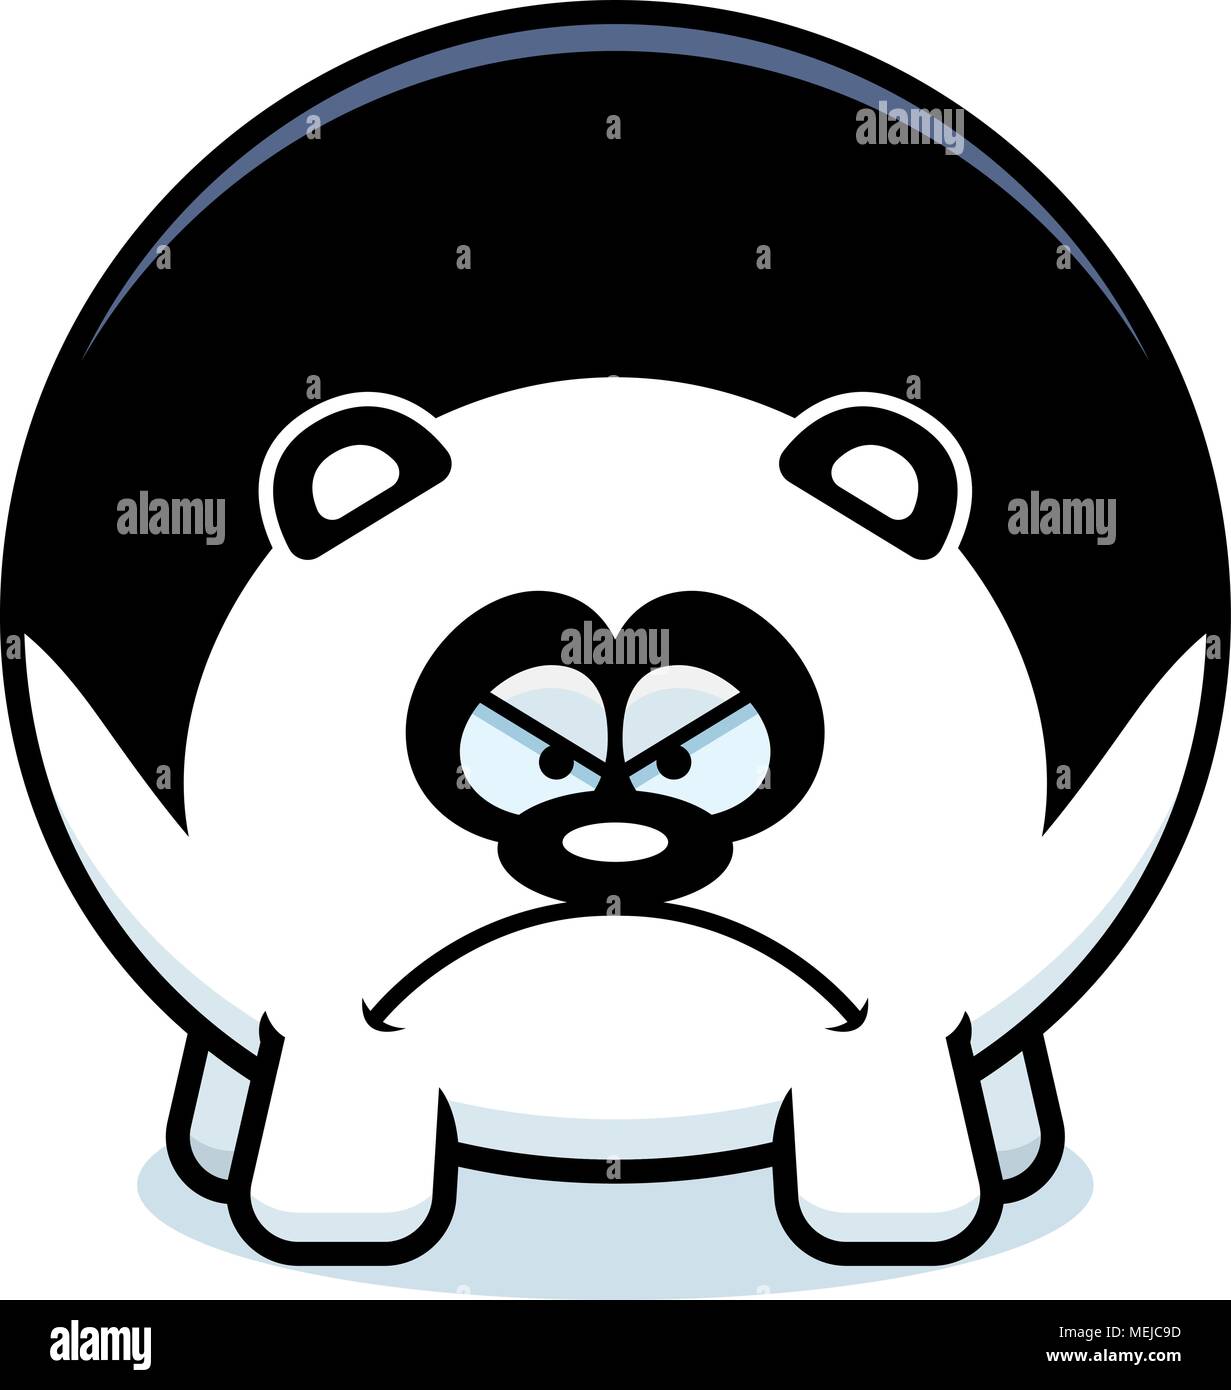 A cartoon illustration of a panda looking angry. Stock Vector